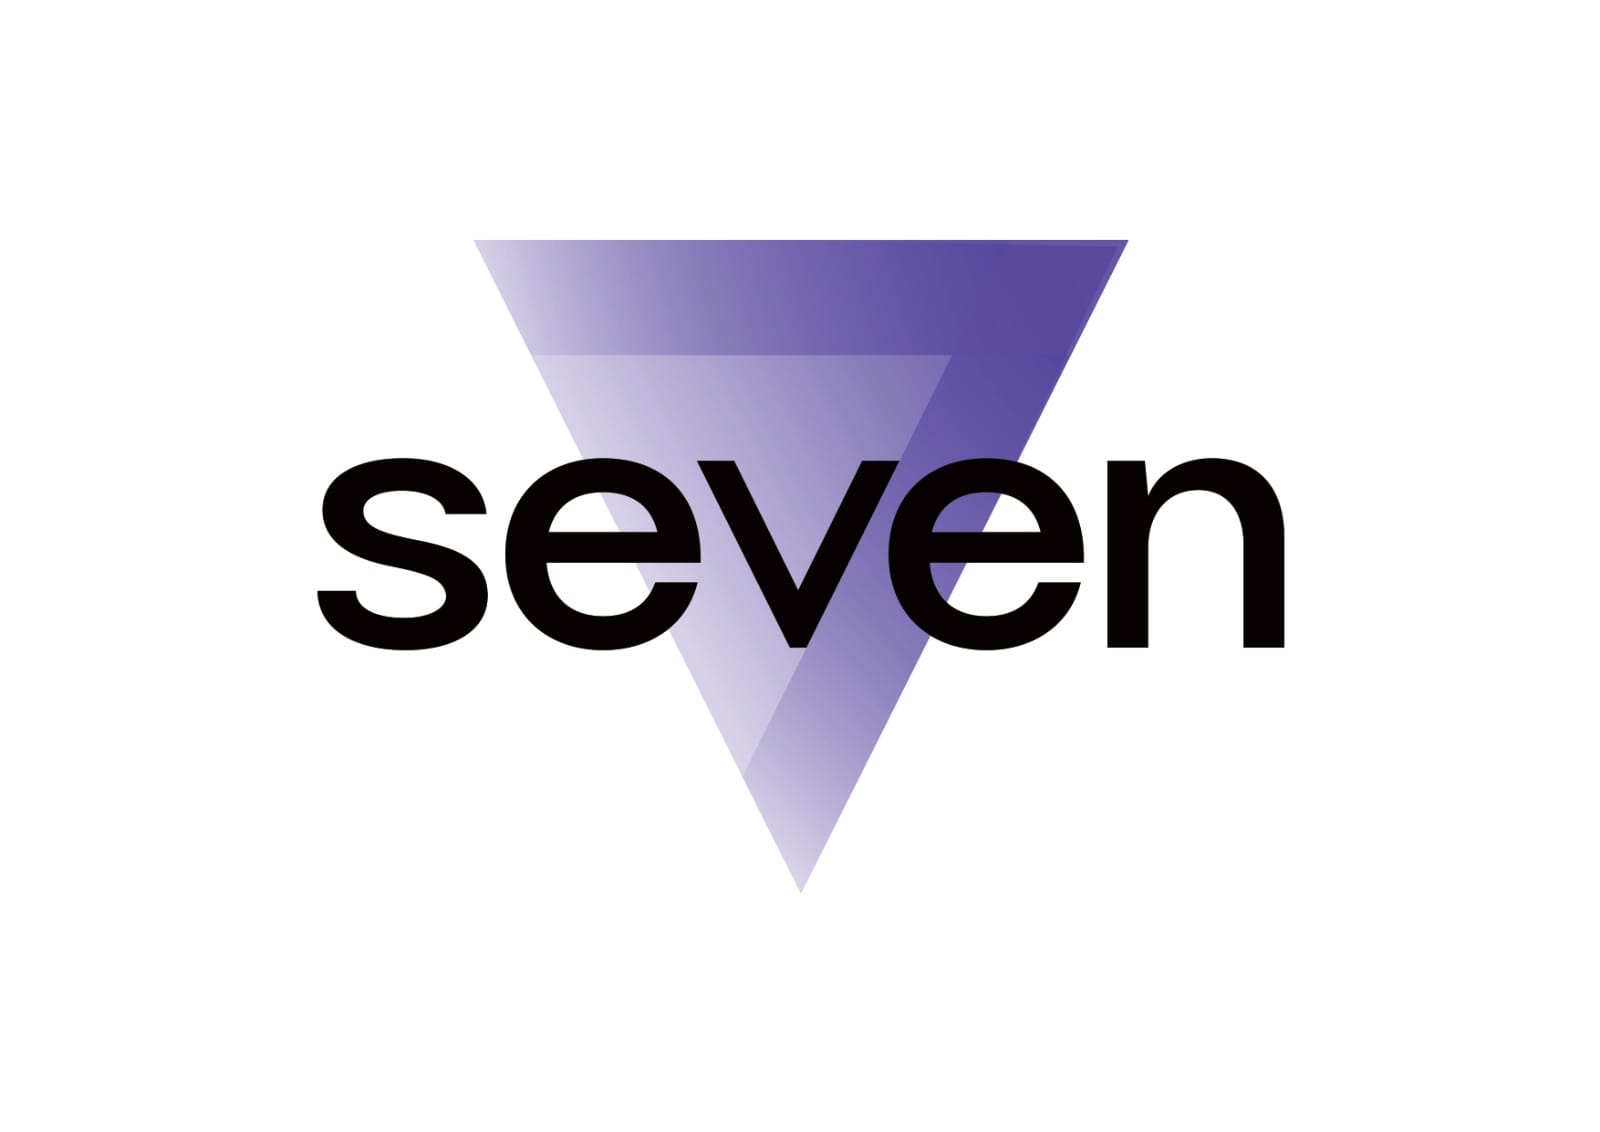 BelCash is rebranded to seven